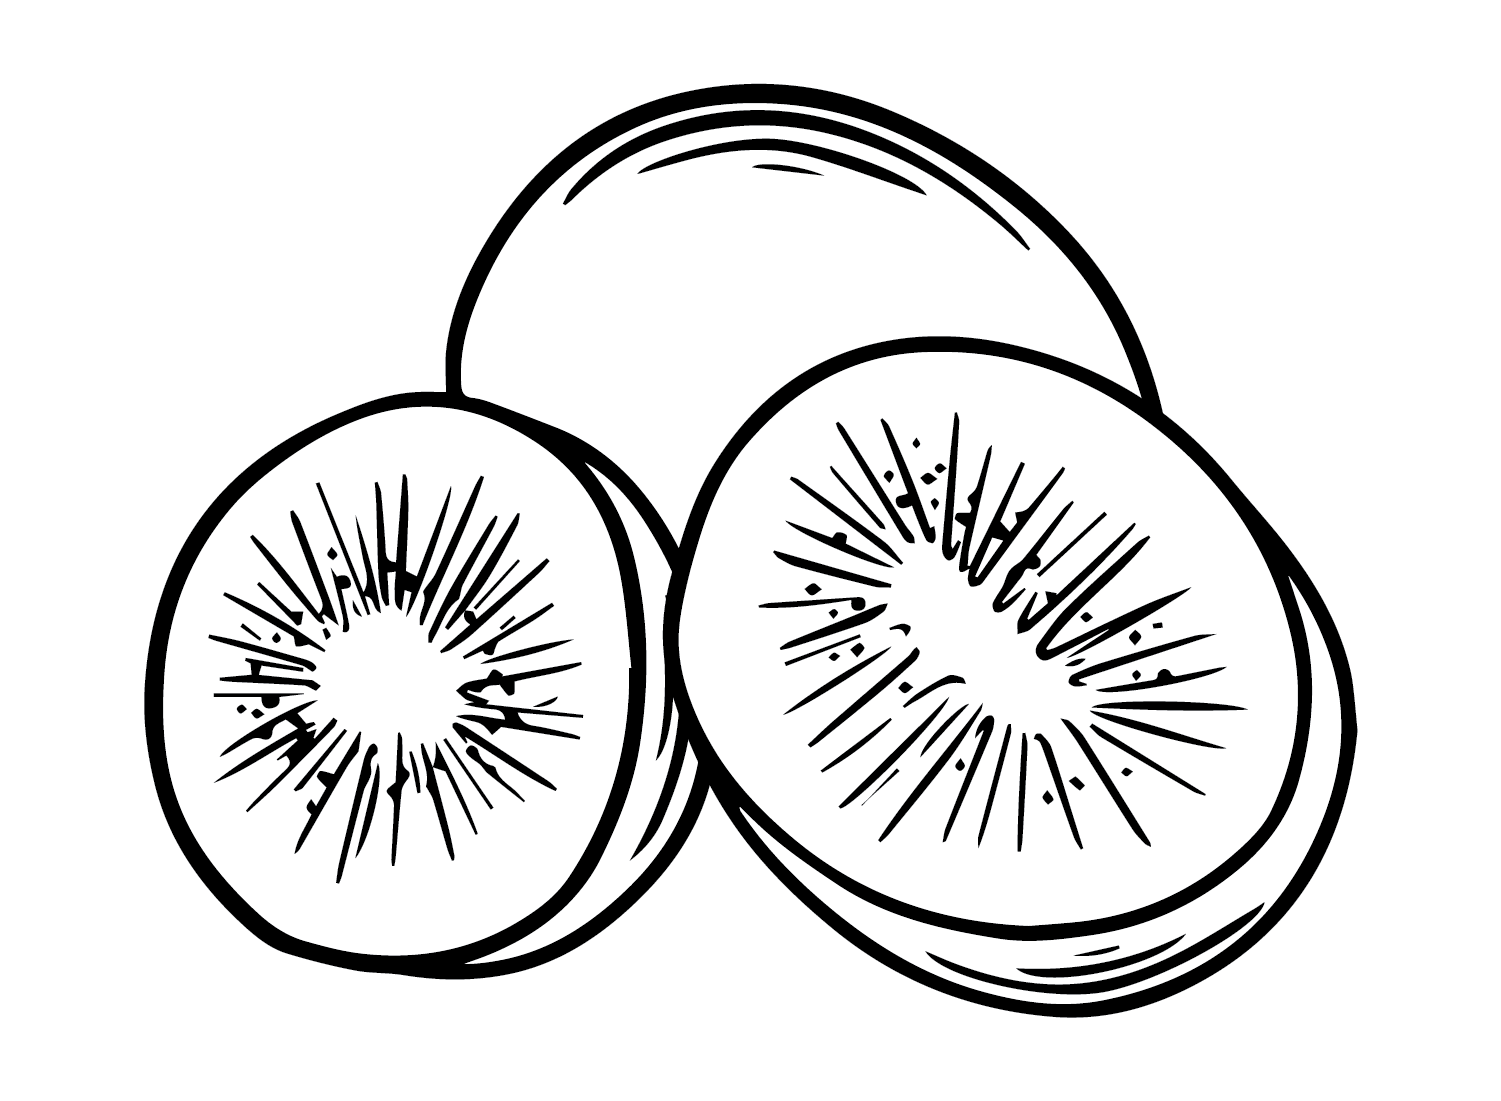 Afbeeldingen Kiwifruit van Kiwifruit